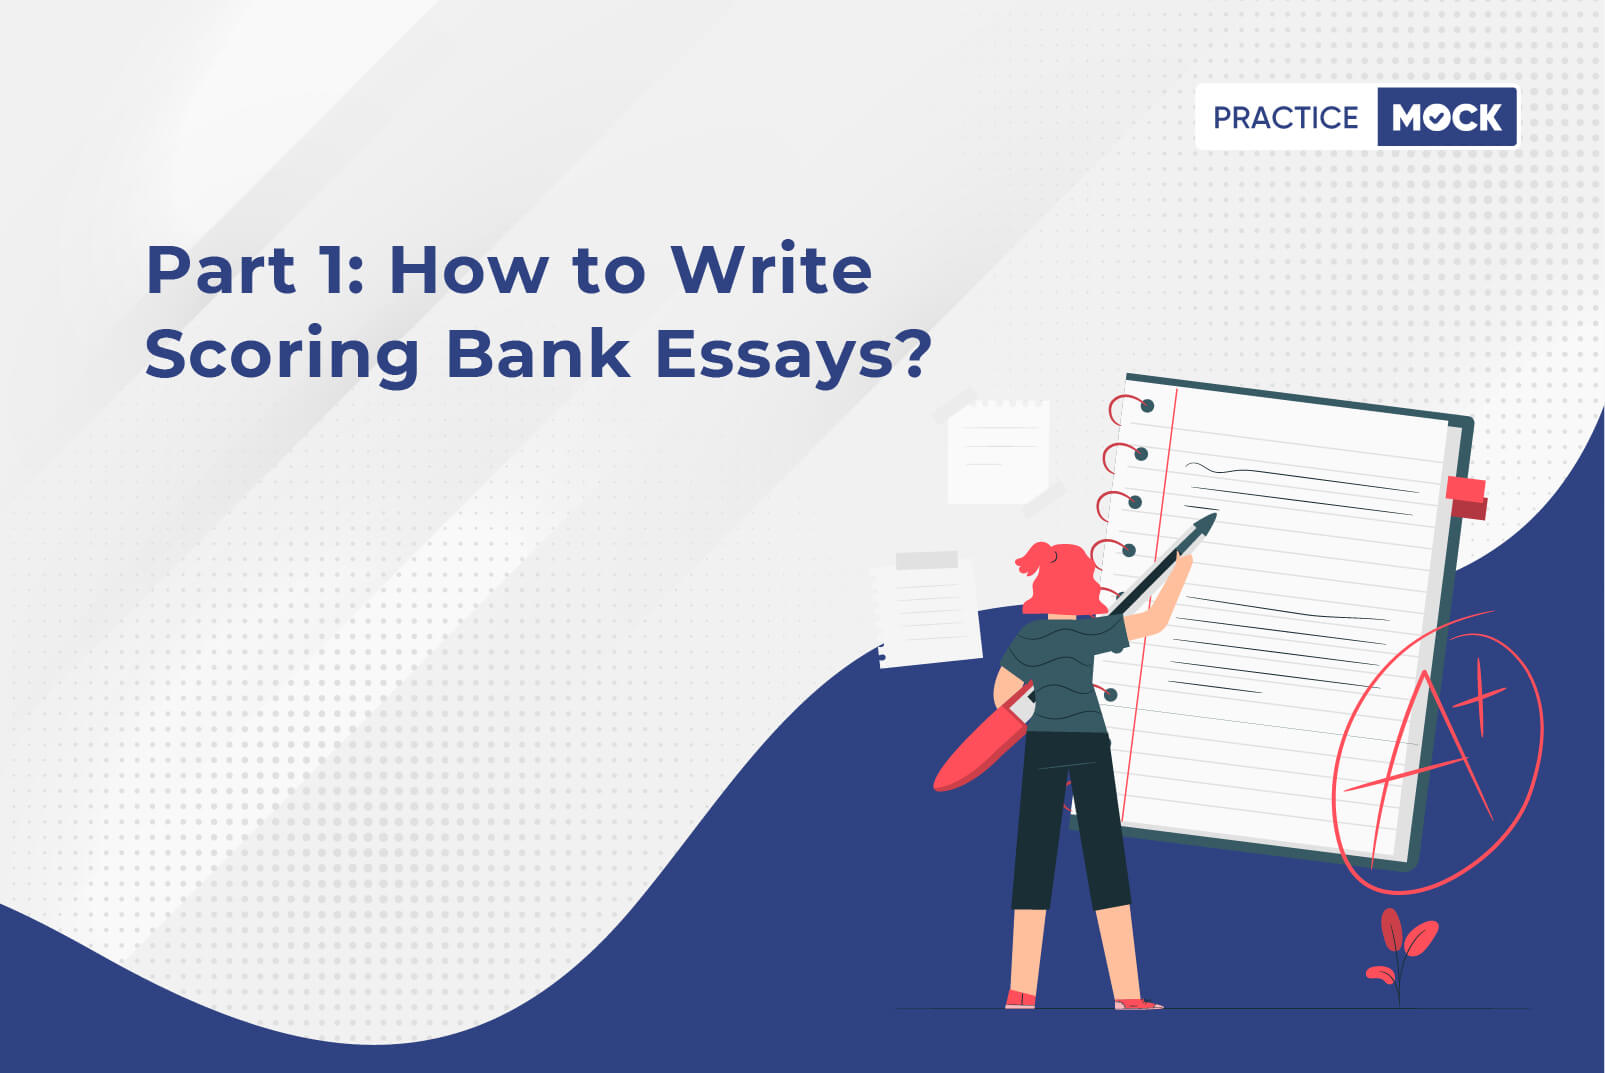 How to Write Scoring Bank Essays?